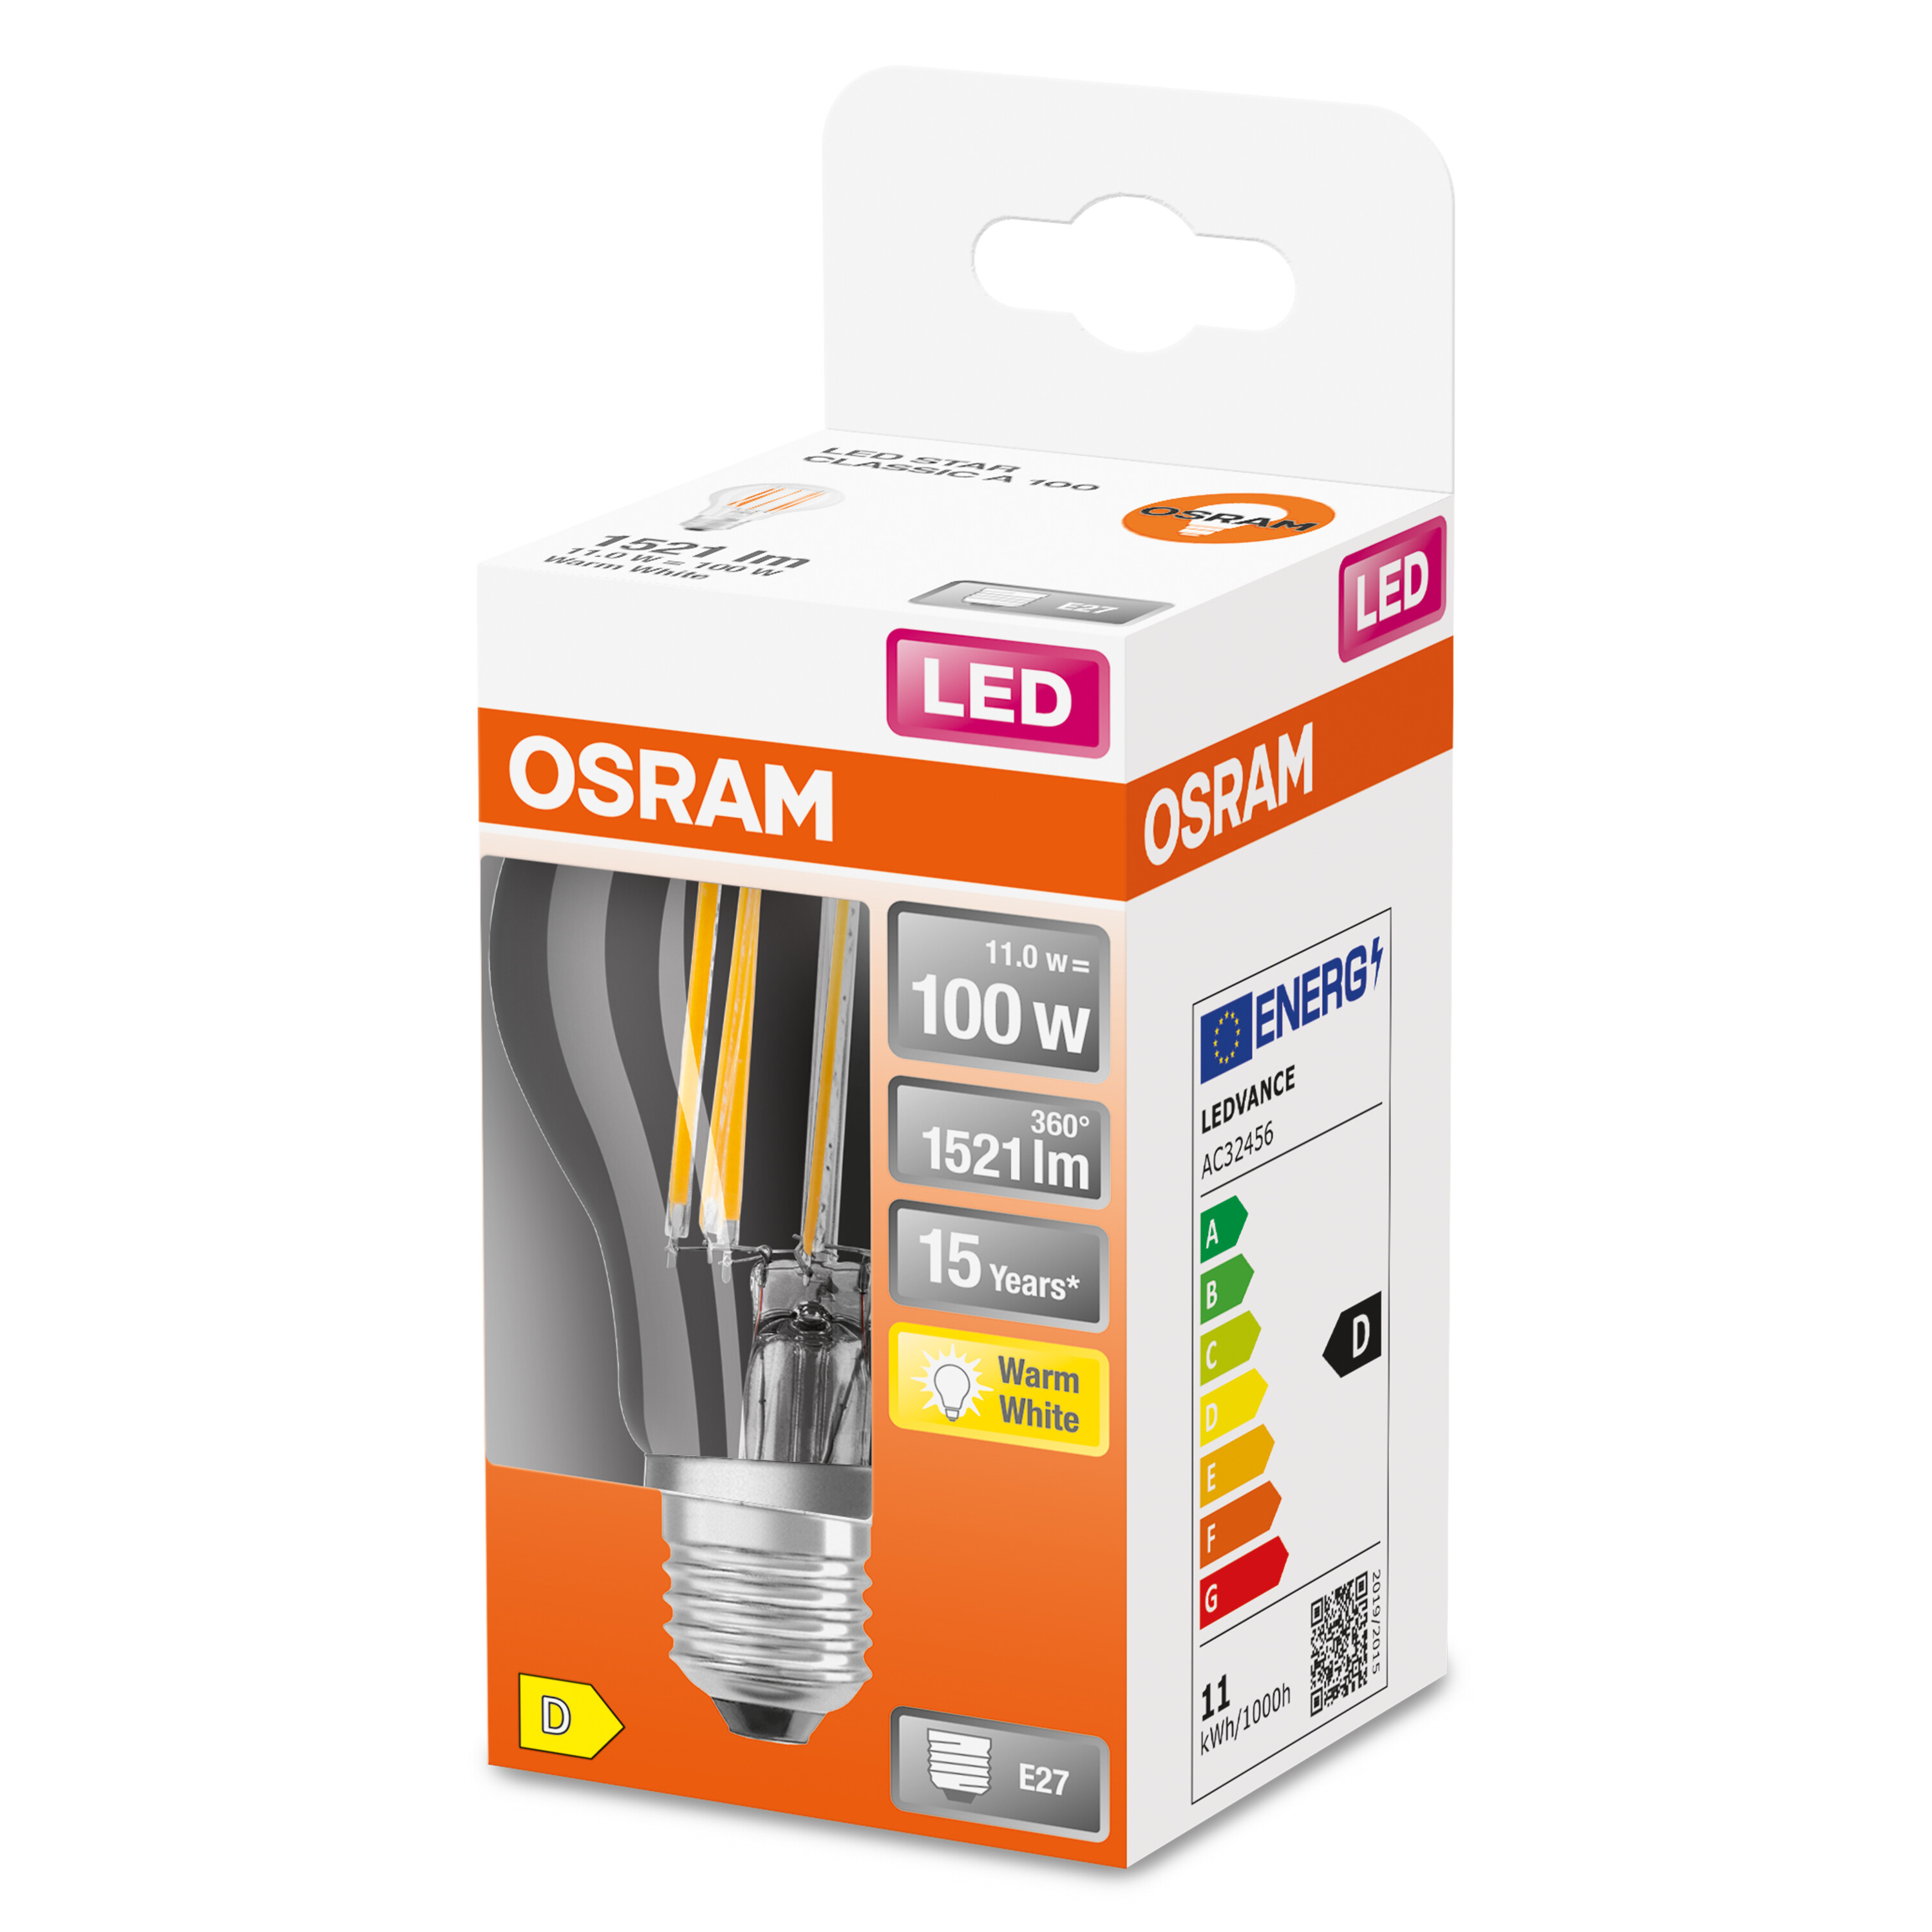 LED LED 1521 Lumen OSRAM  Warmweiß A CLASSIC Lampe Retrofit